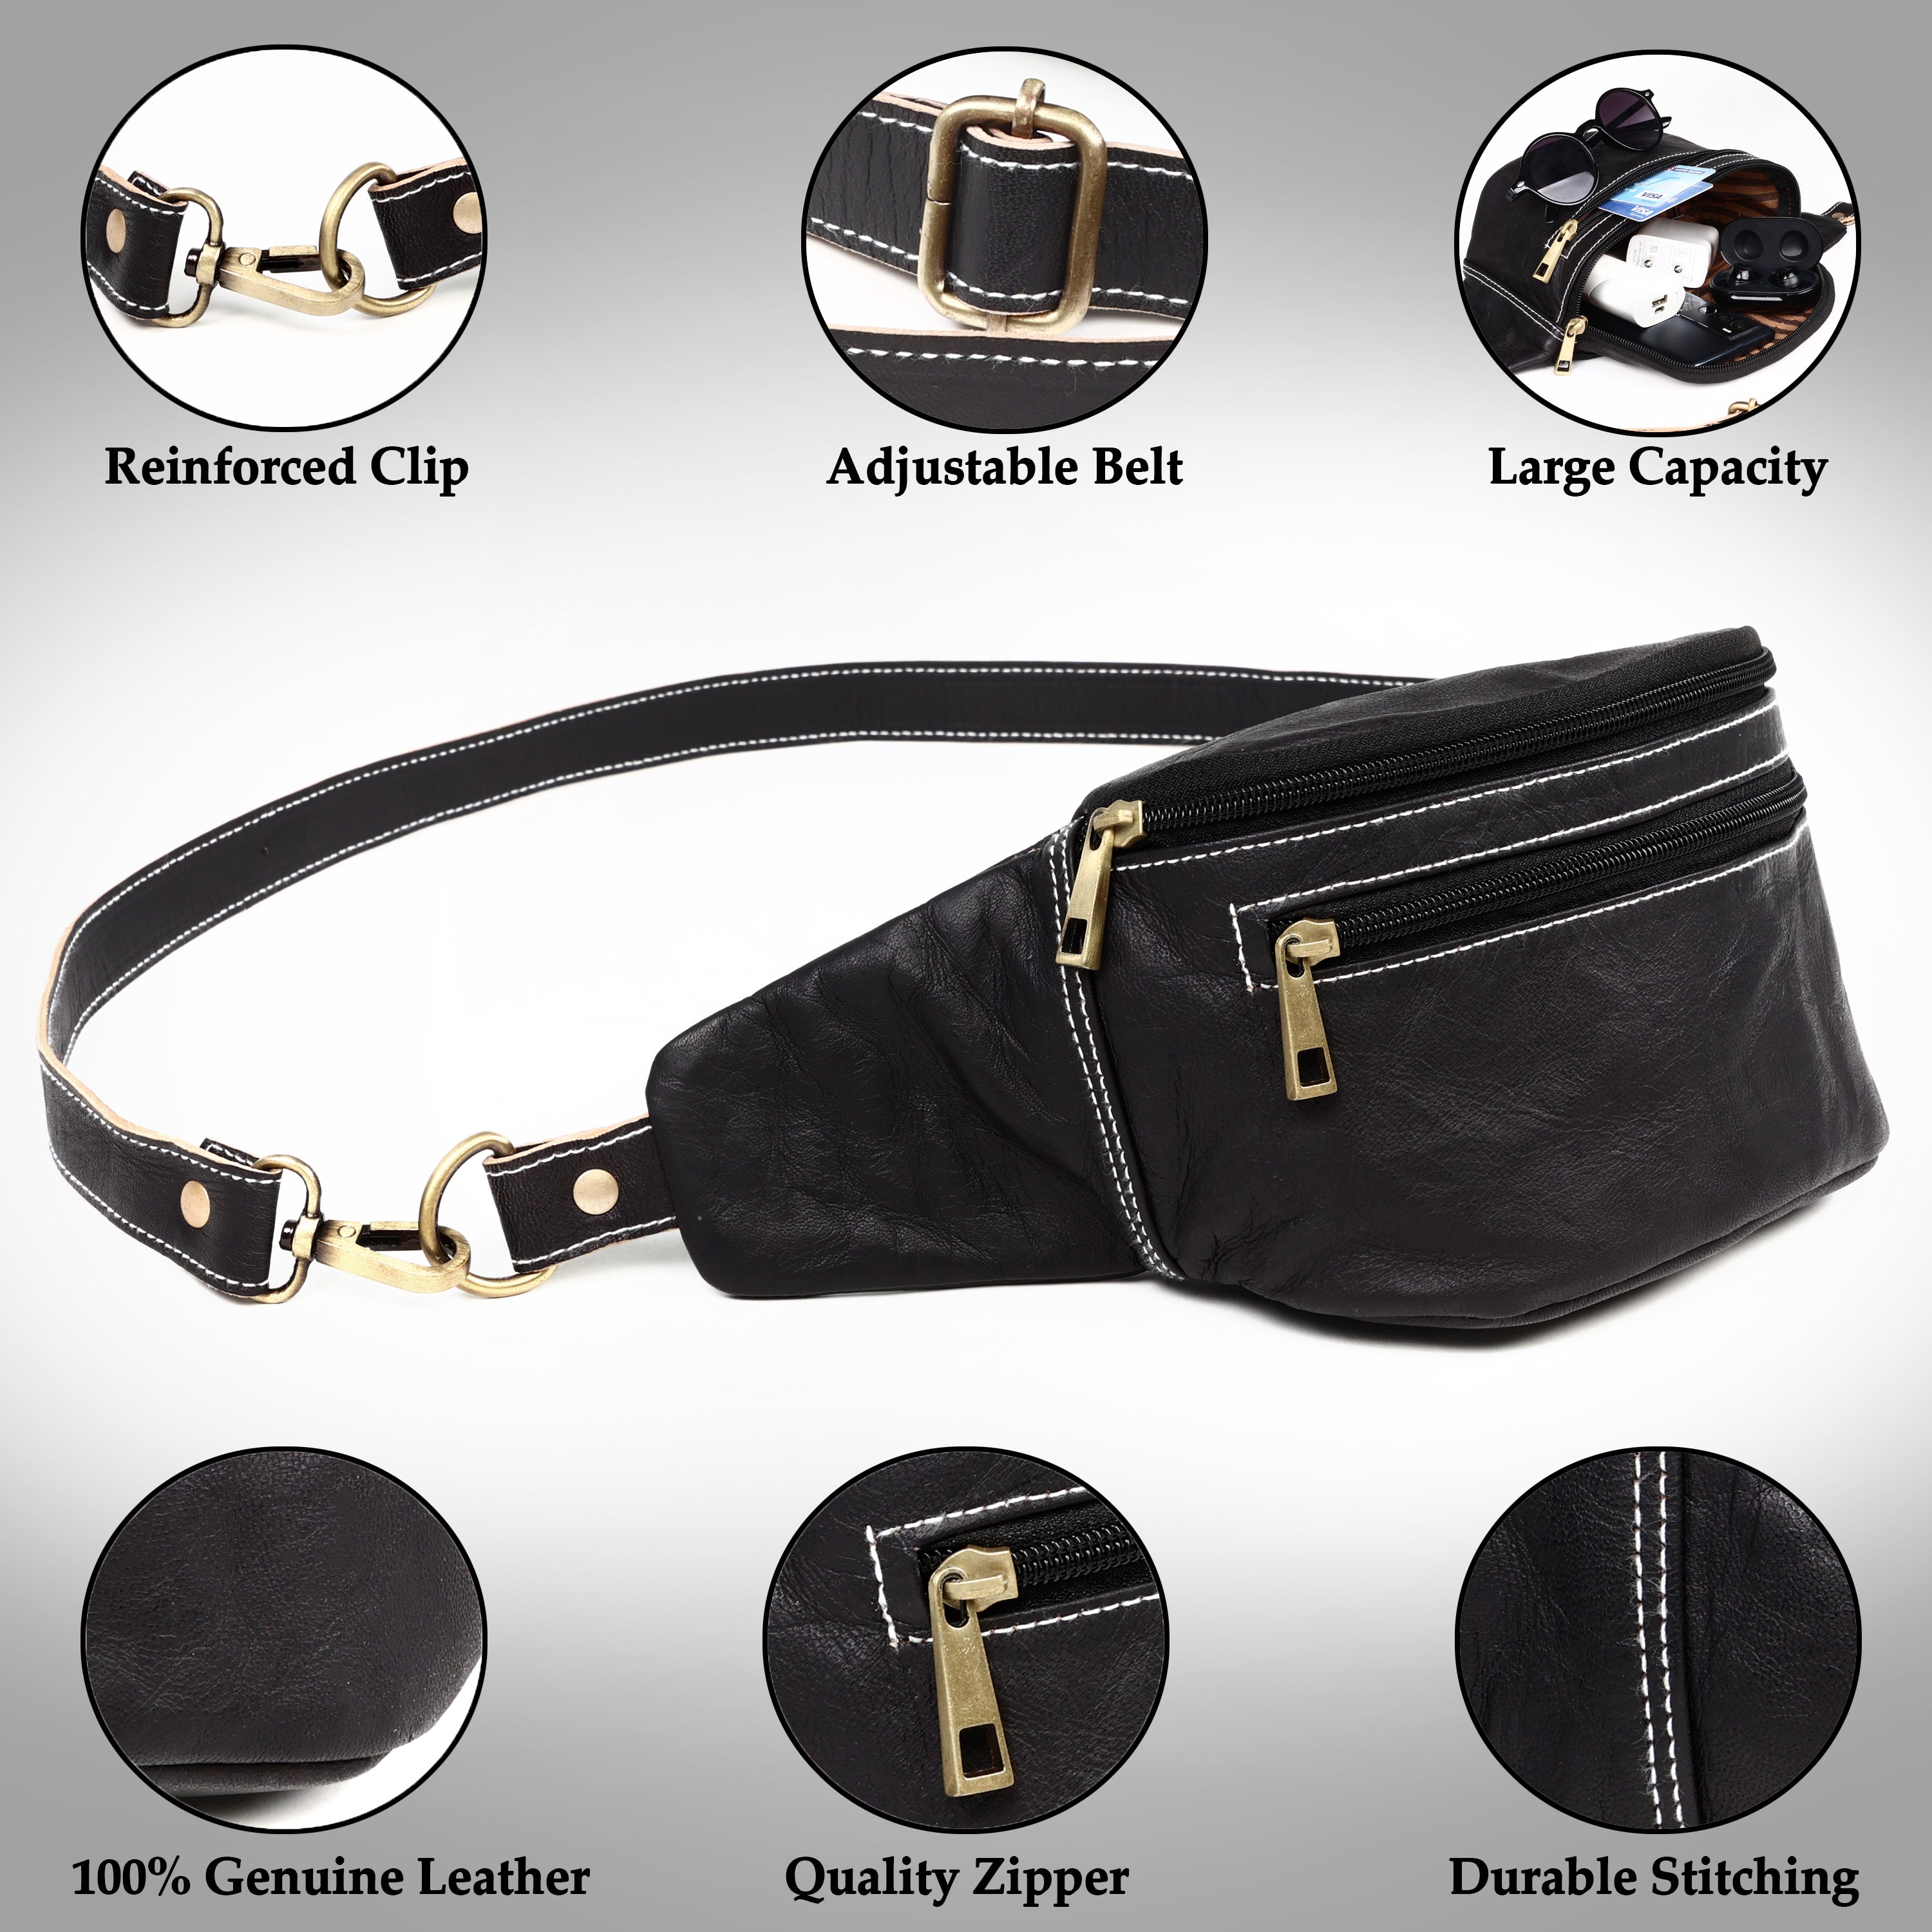 Black Leather Fanny Pack for Unisex Waist Belt Bag for Travel Sports